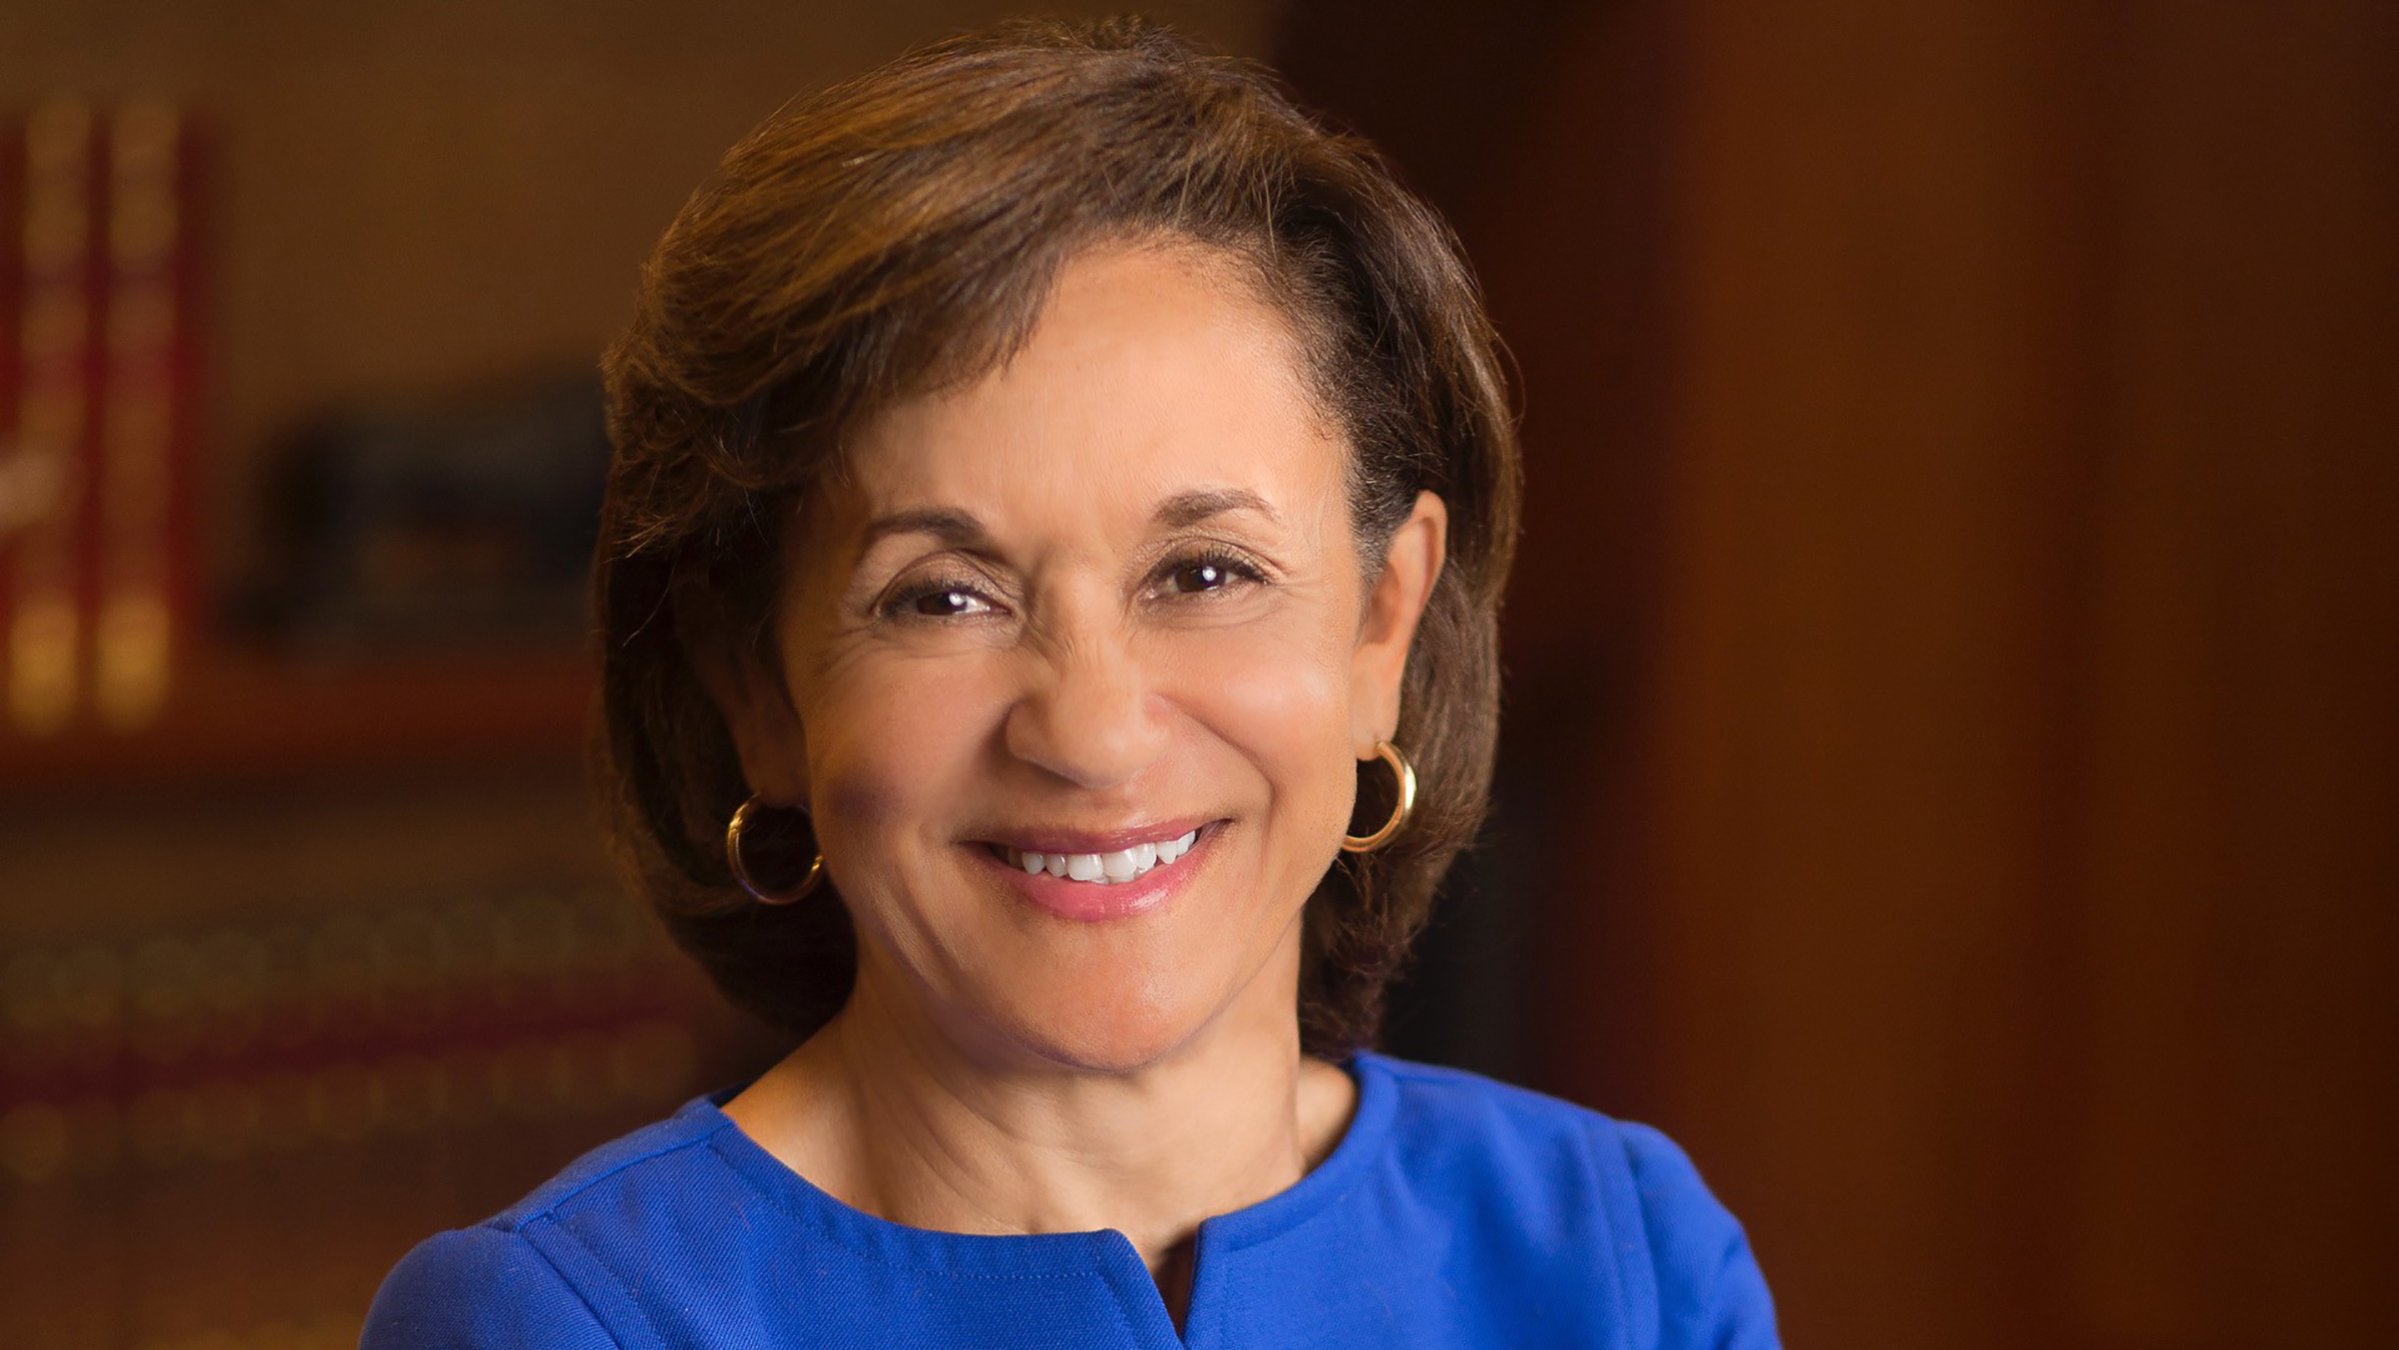 Glenda McNeal, President, Enterprise Strategic Partnerships at American Express